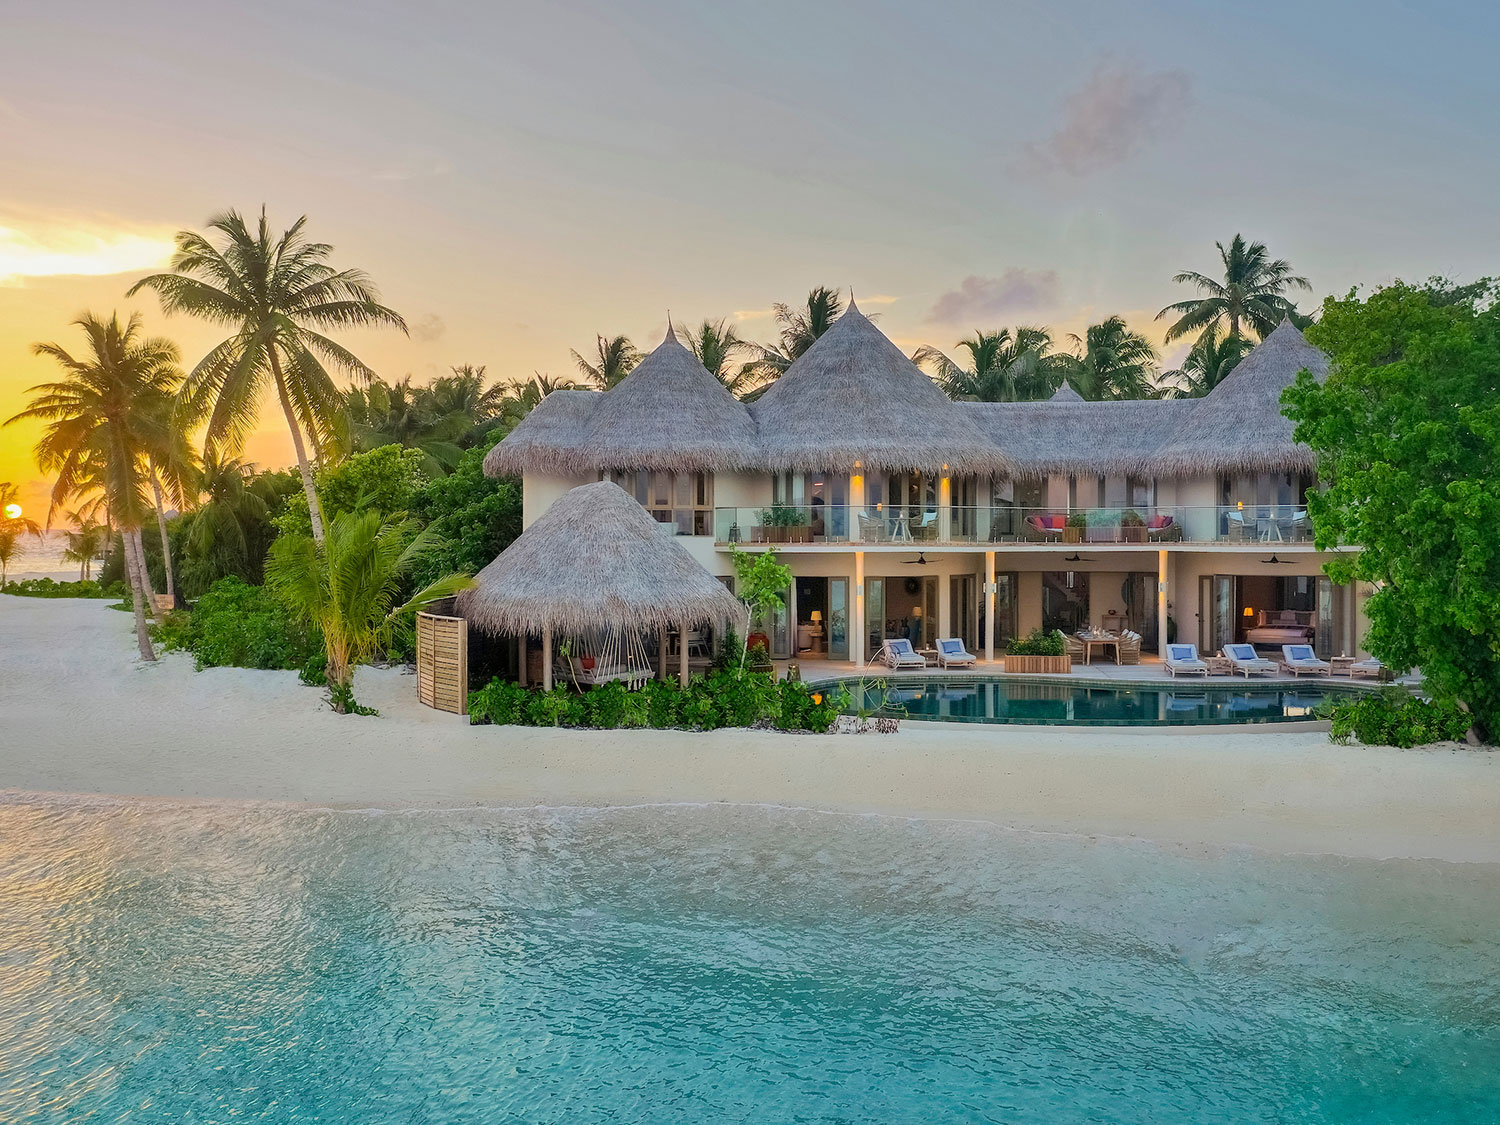 One of the beach villas at The Nautilus Maldives.